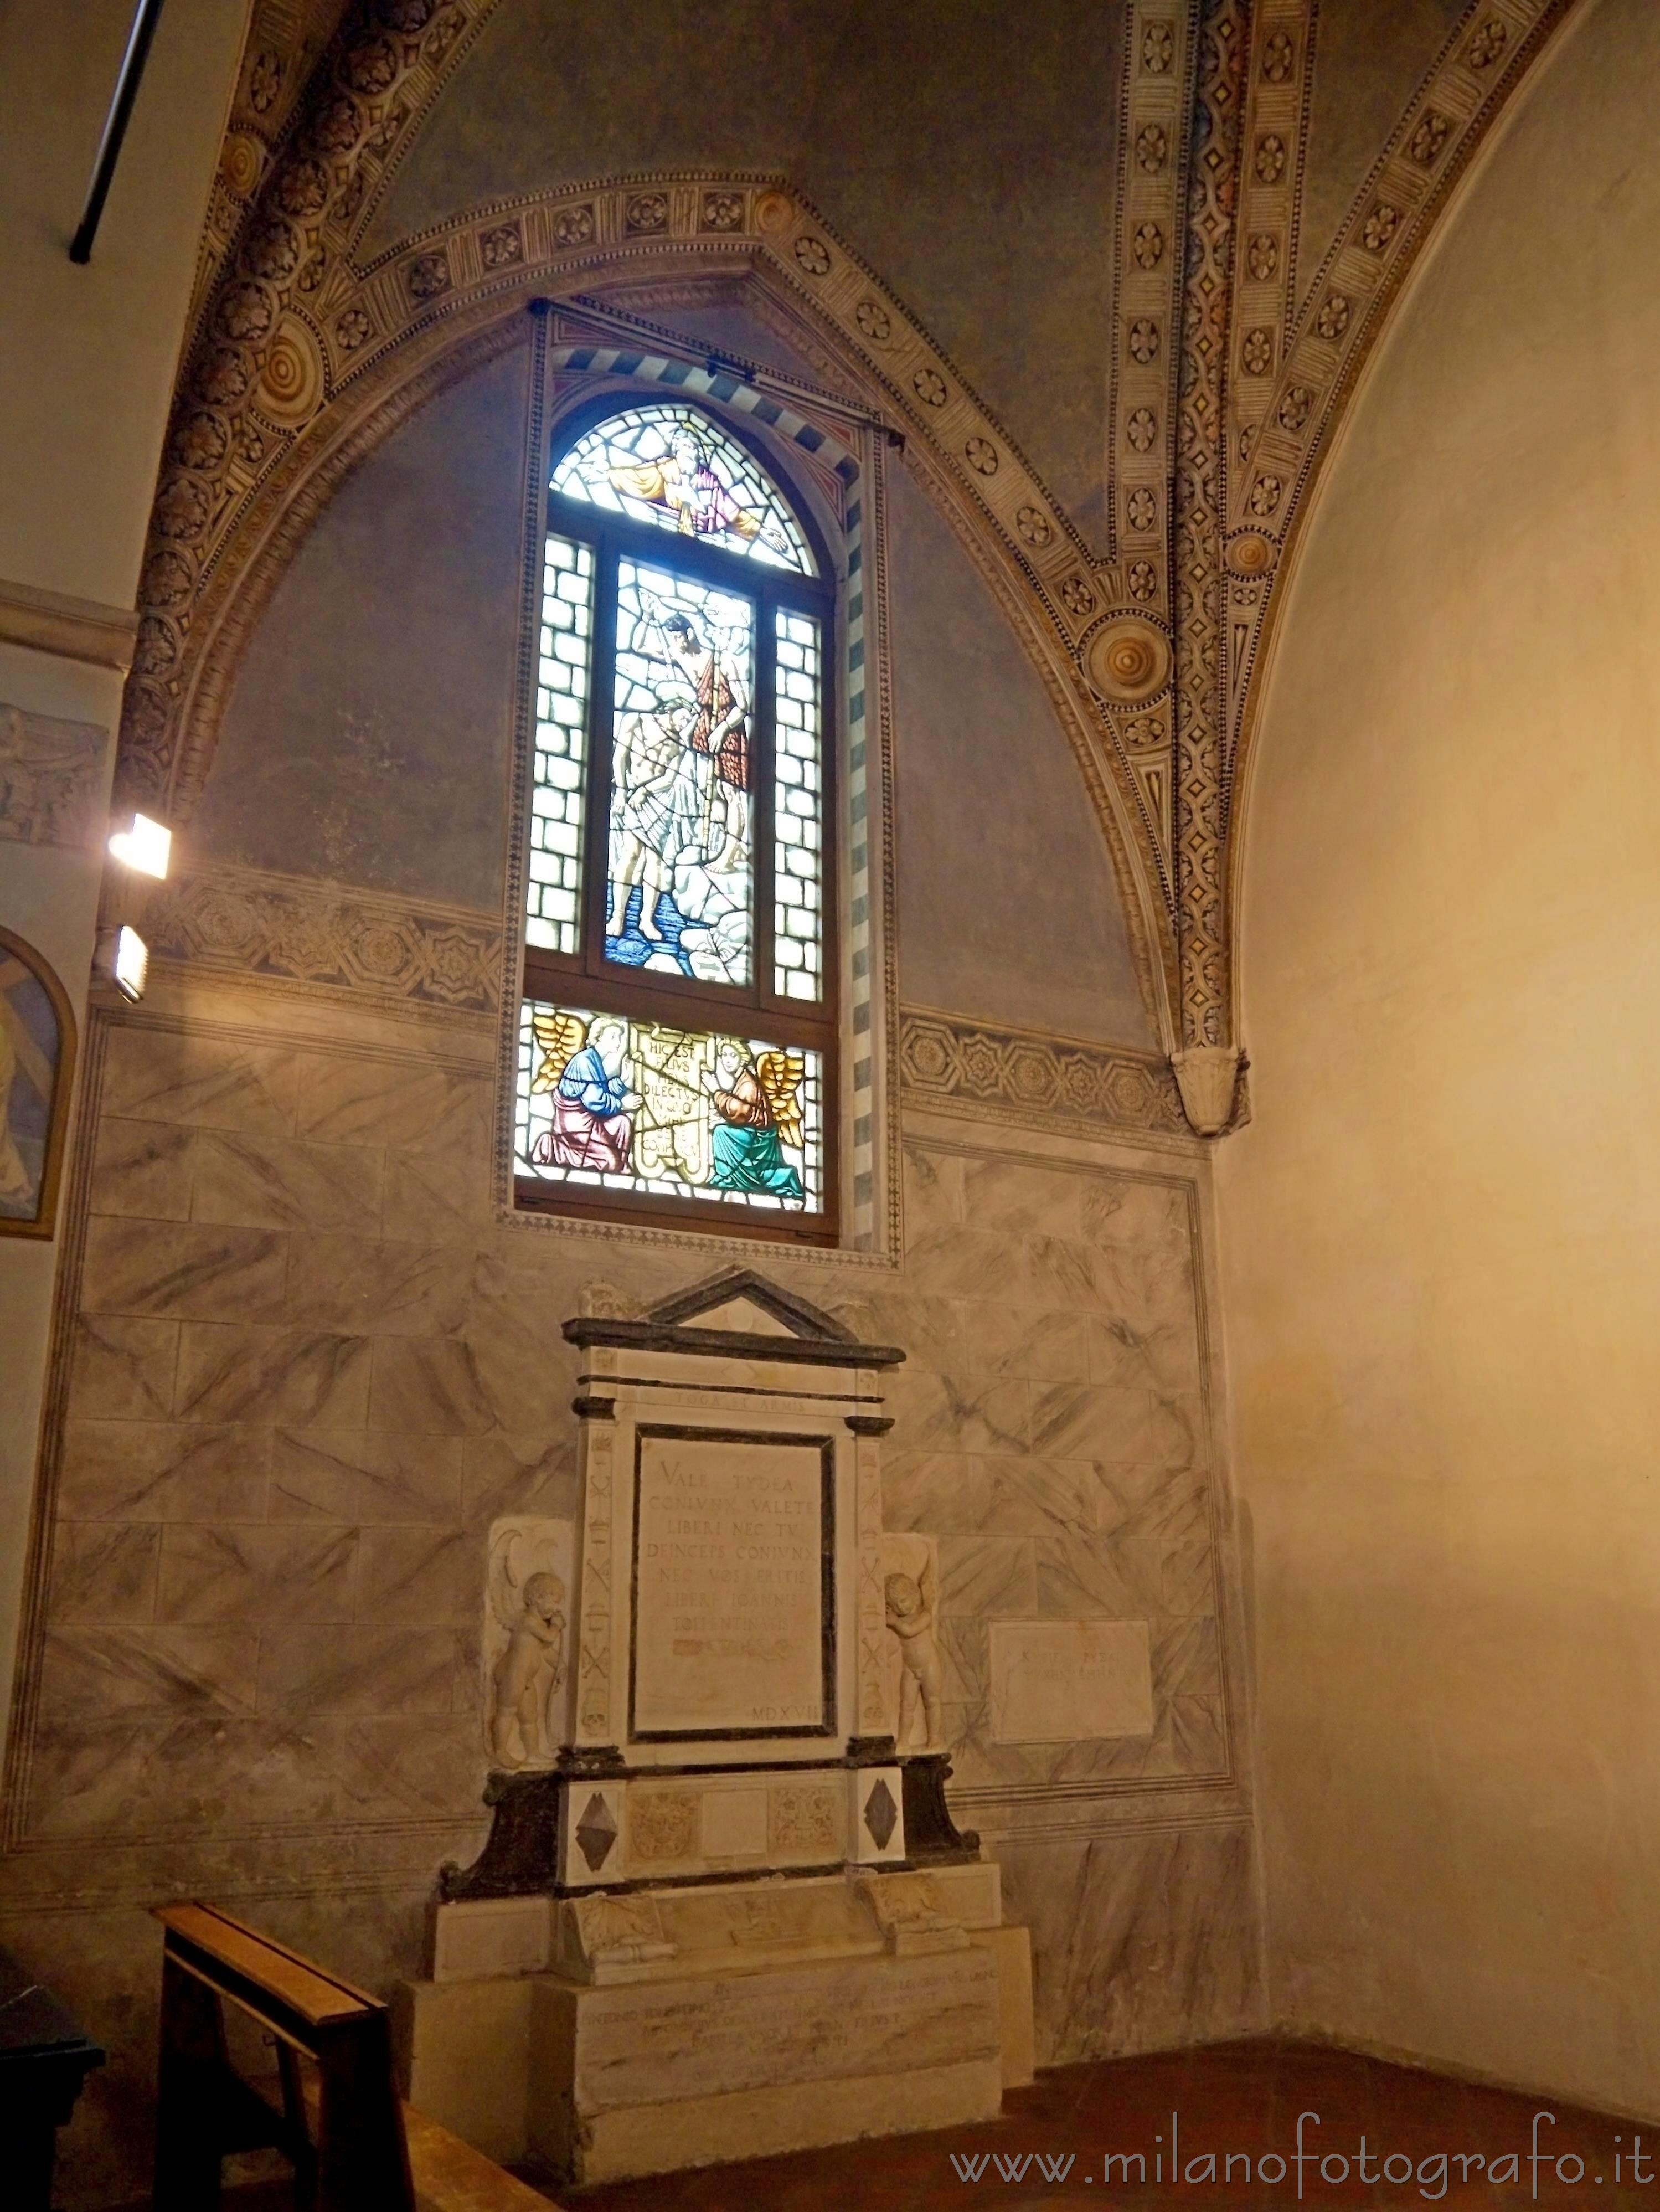 Milan (Italy): Funeral monument to Giovanni da Tolentino - Milan (Italy)